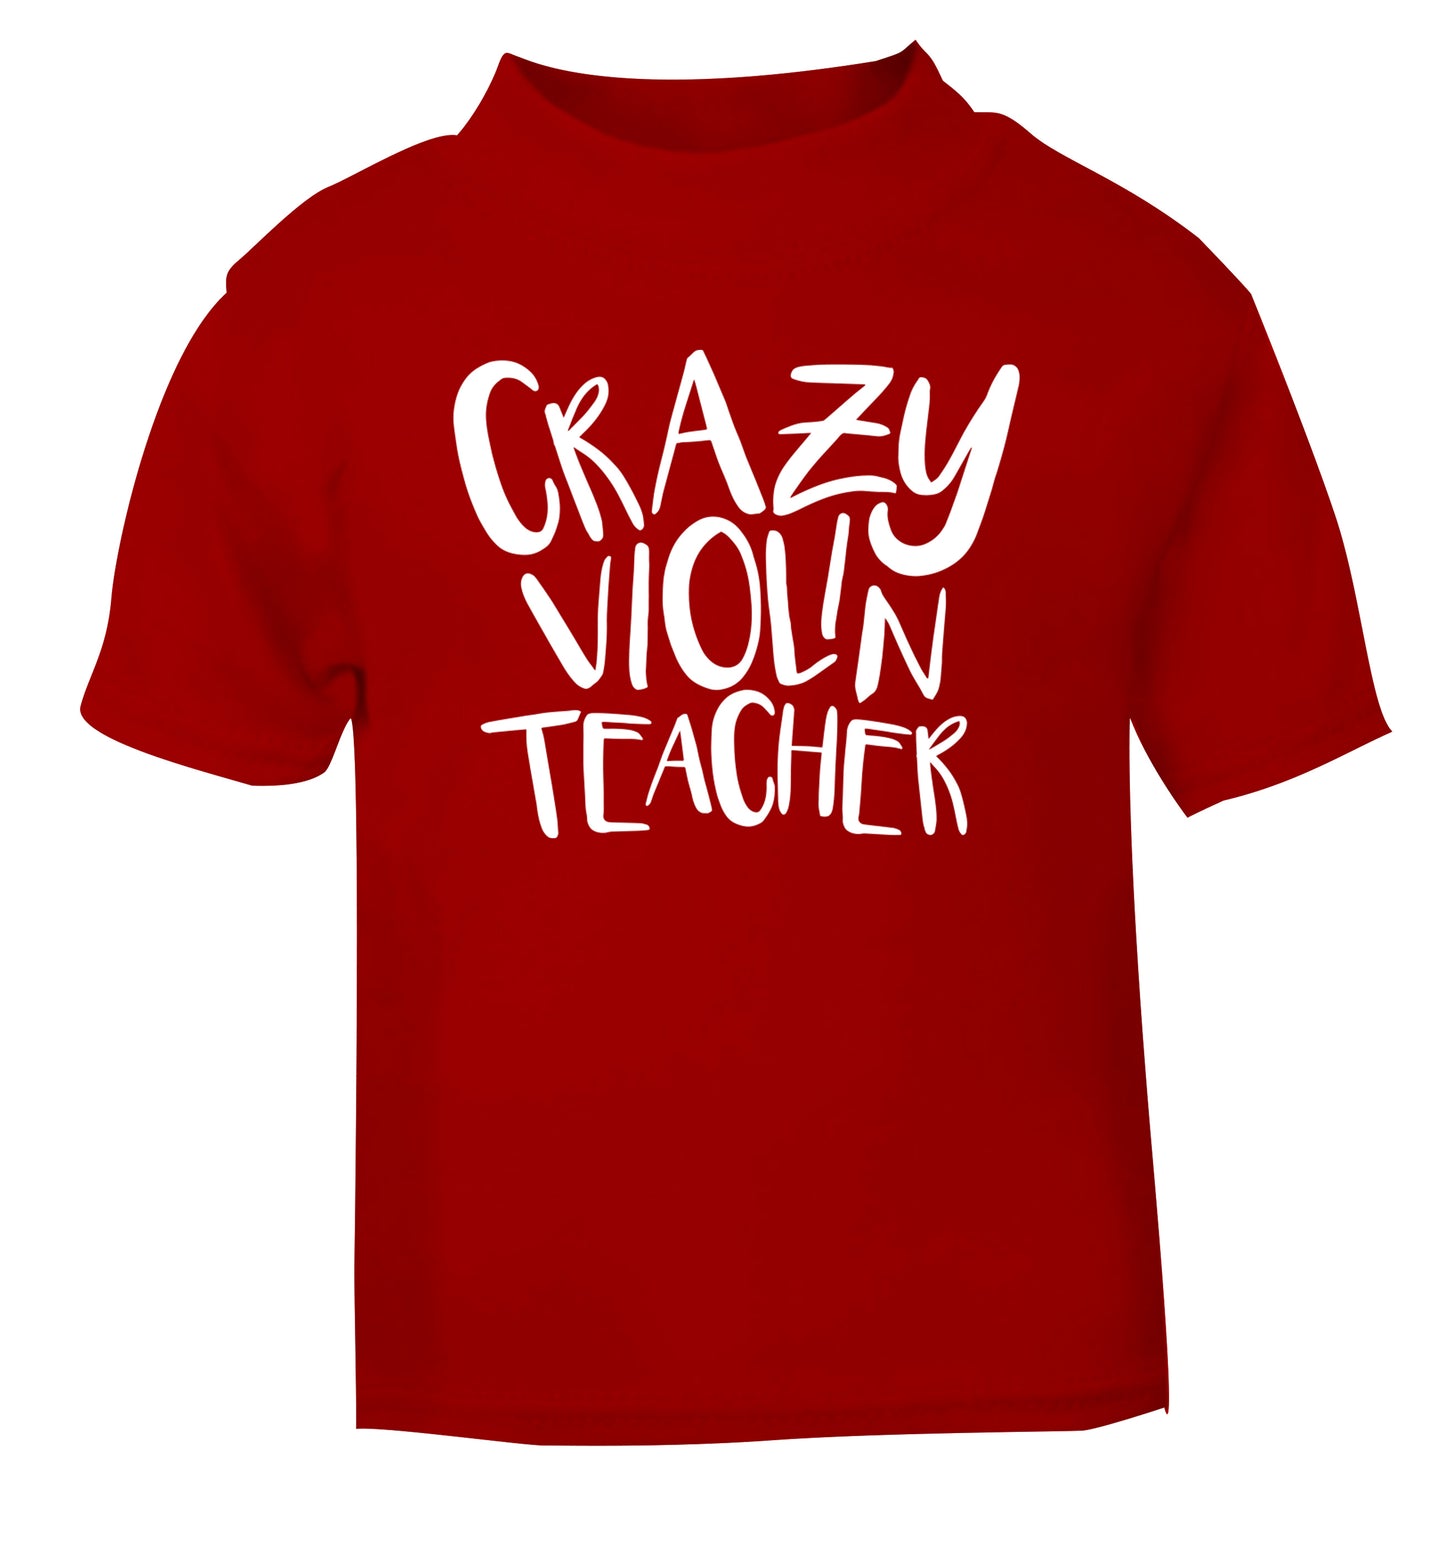 Crazy violin teacher red Baby Toddler Tshirt 2 Years